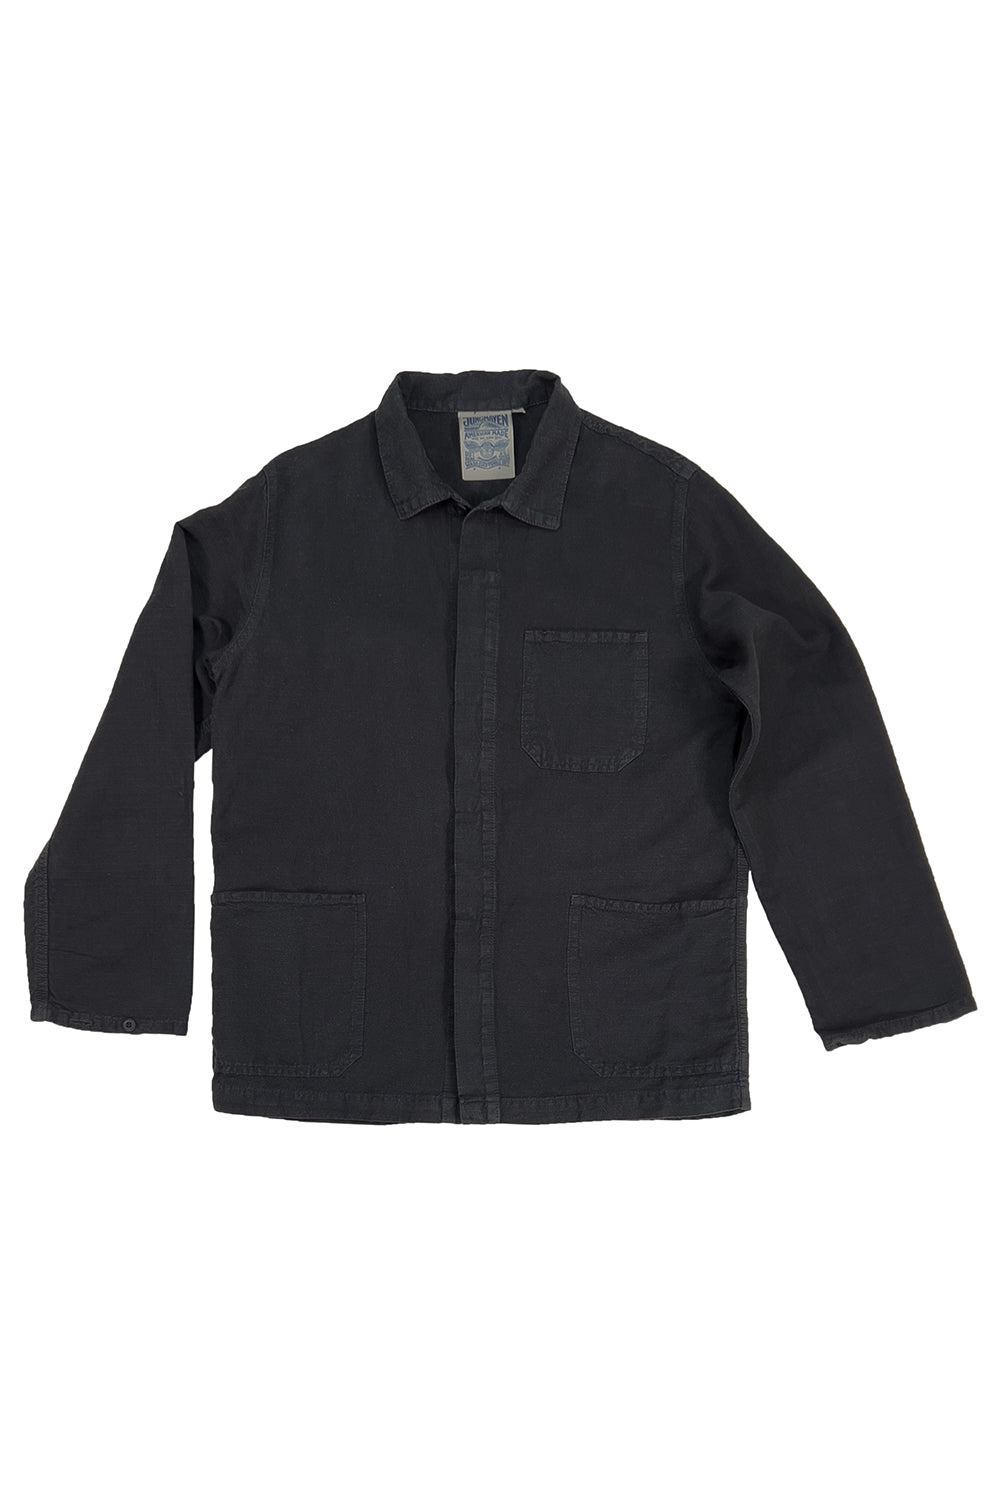 Cascade Jacket | Jungmaven Hemp Clothing & Accessories / Color: Black